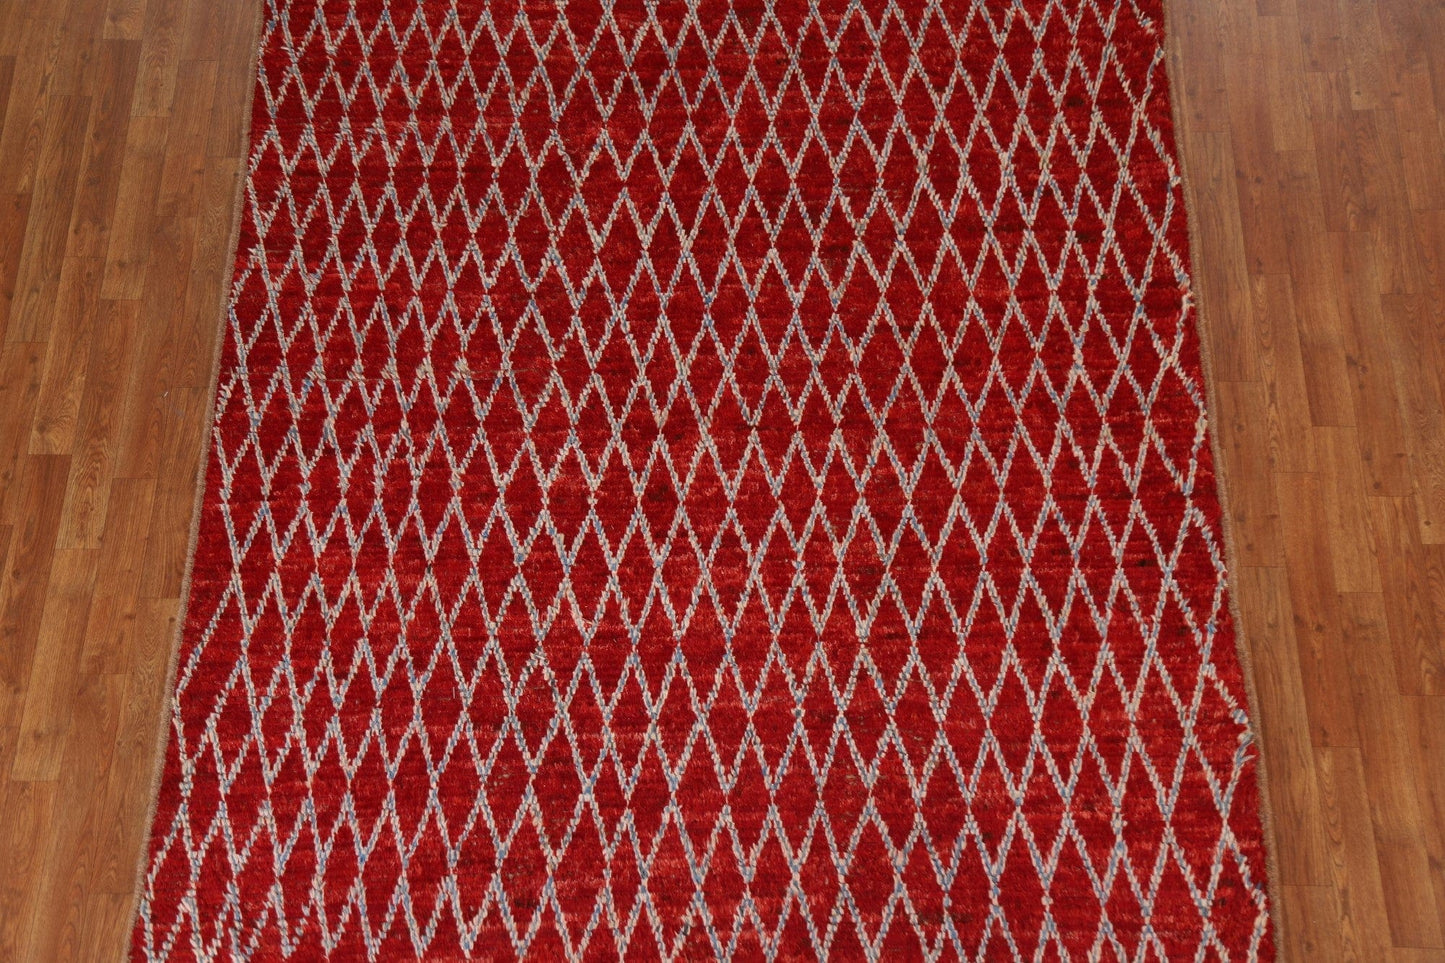 Trellis Red Moroccan Area Rug 6x10